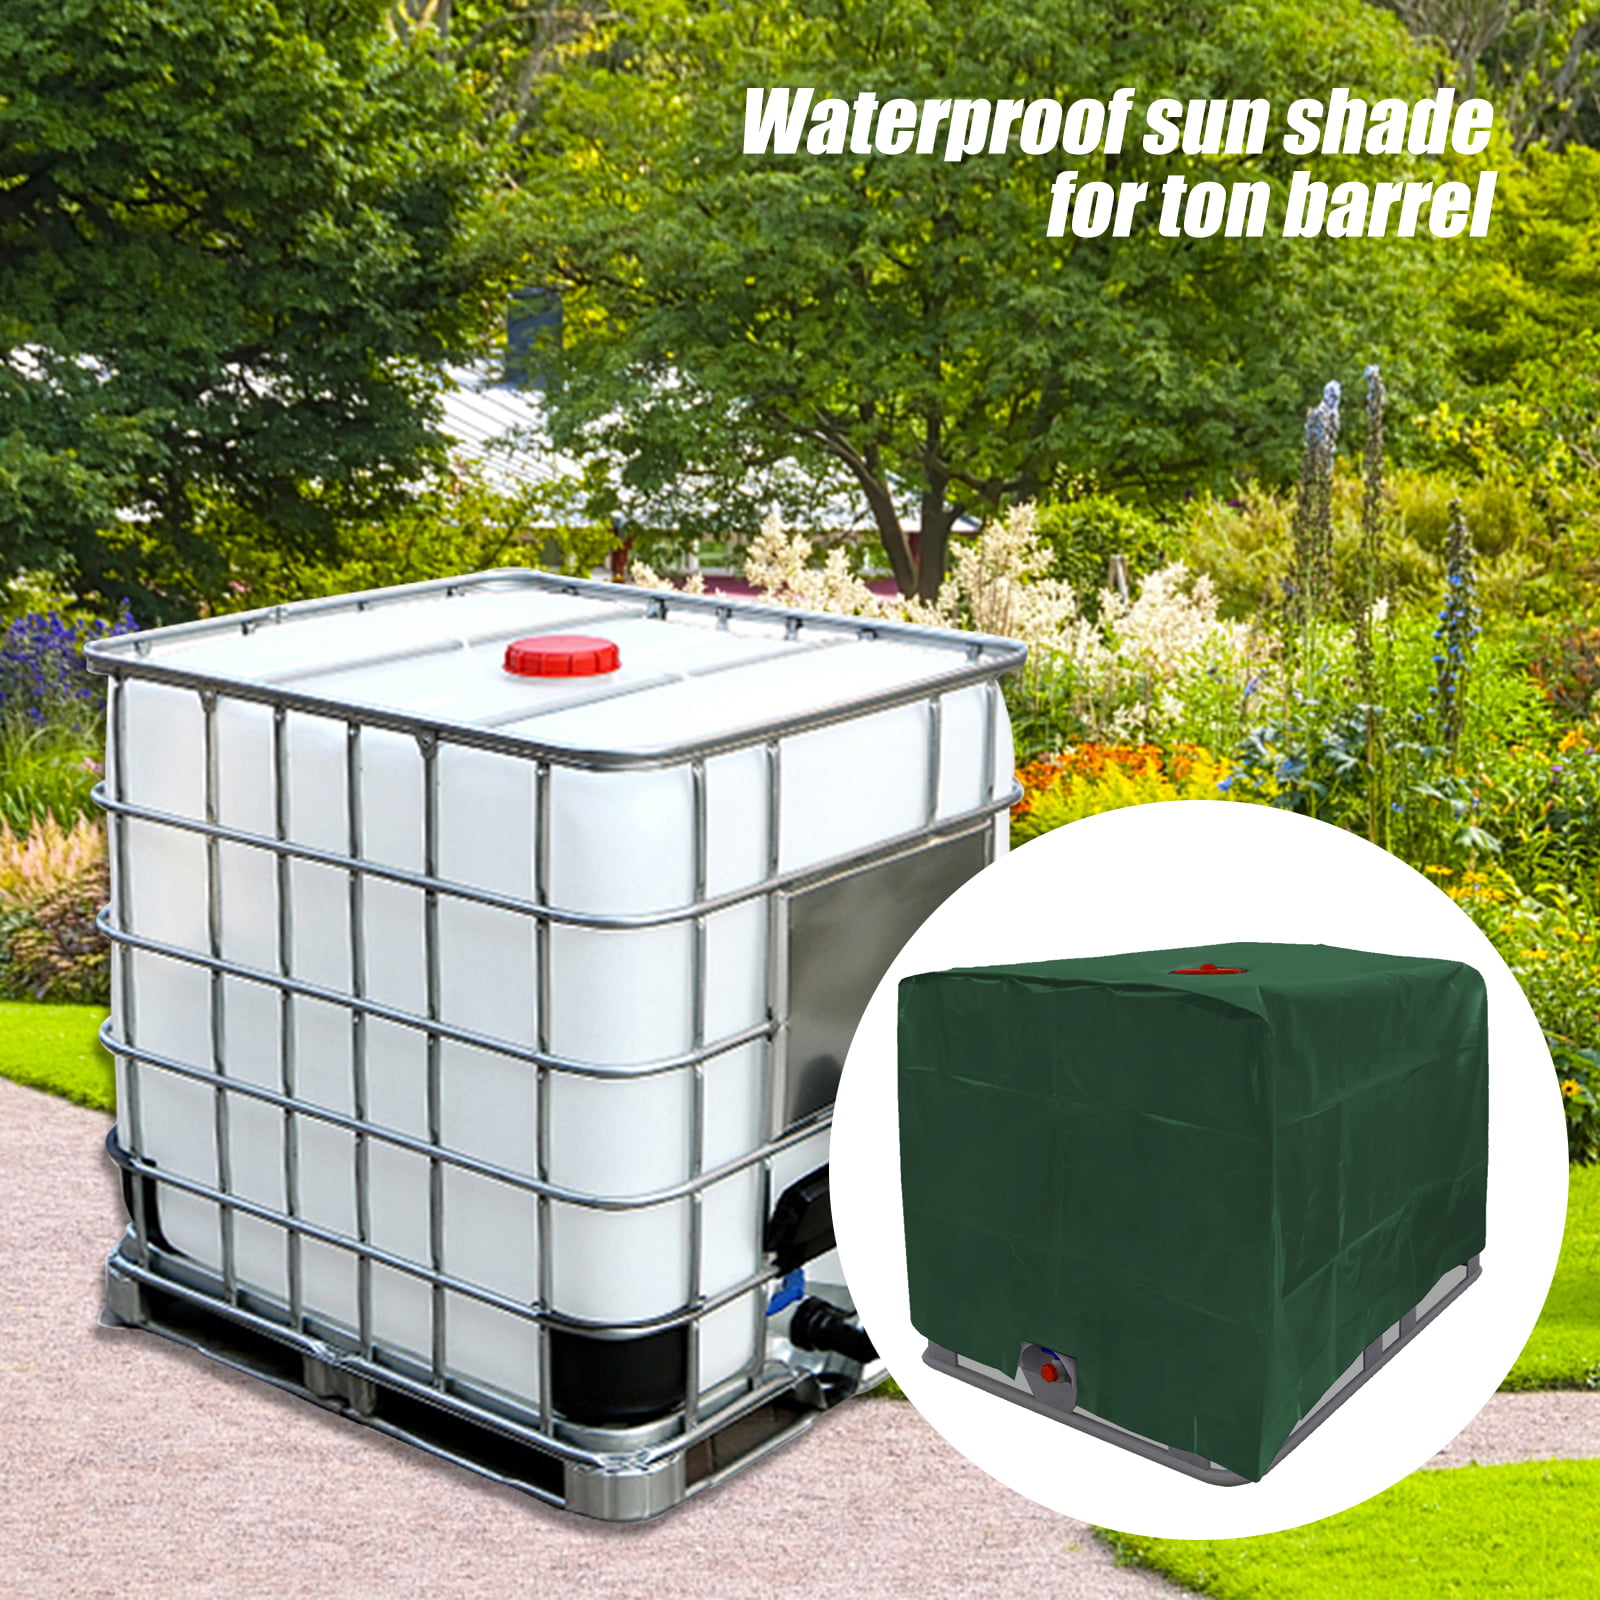 Garden Outdoor Cover for Rain Water Tank,Ton Barrel Cover 210D Fabric Waterproof Sun Protective IBC Tank Cover Rain Water Storage